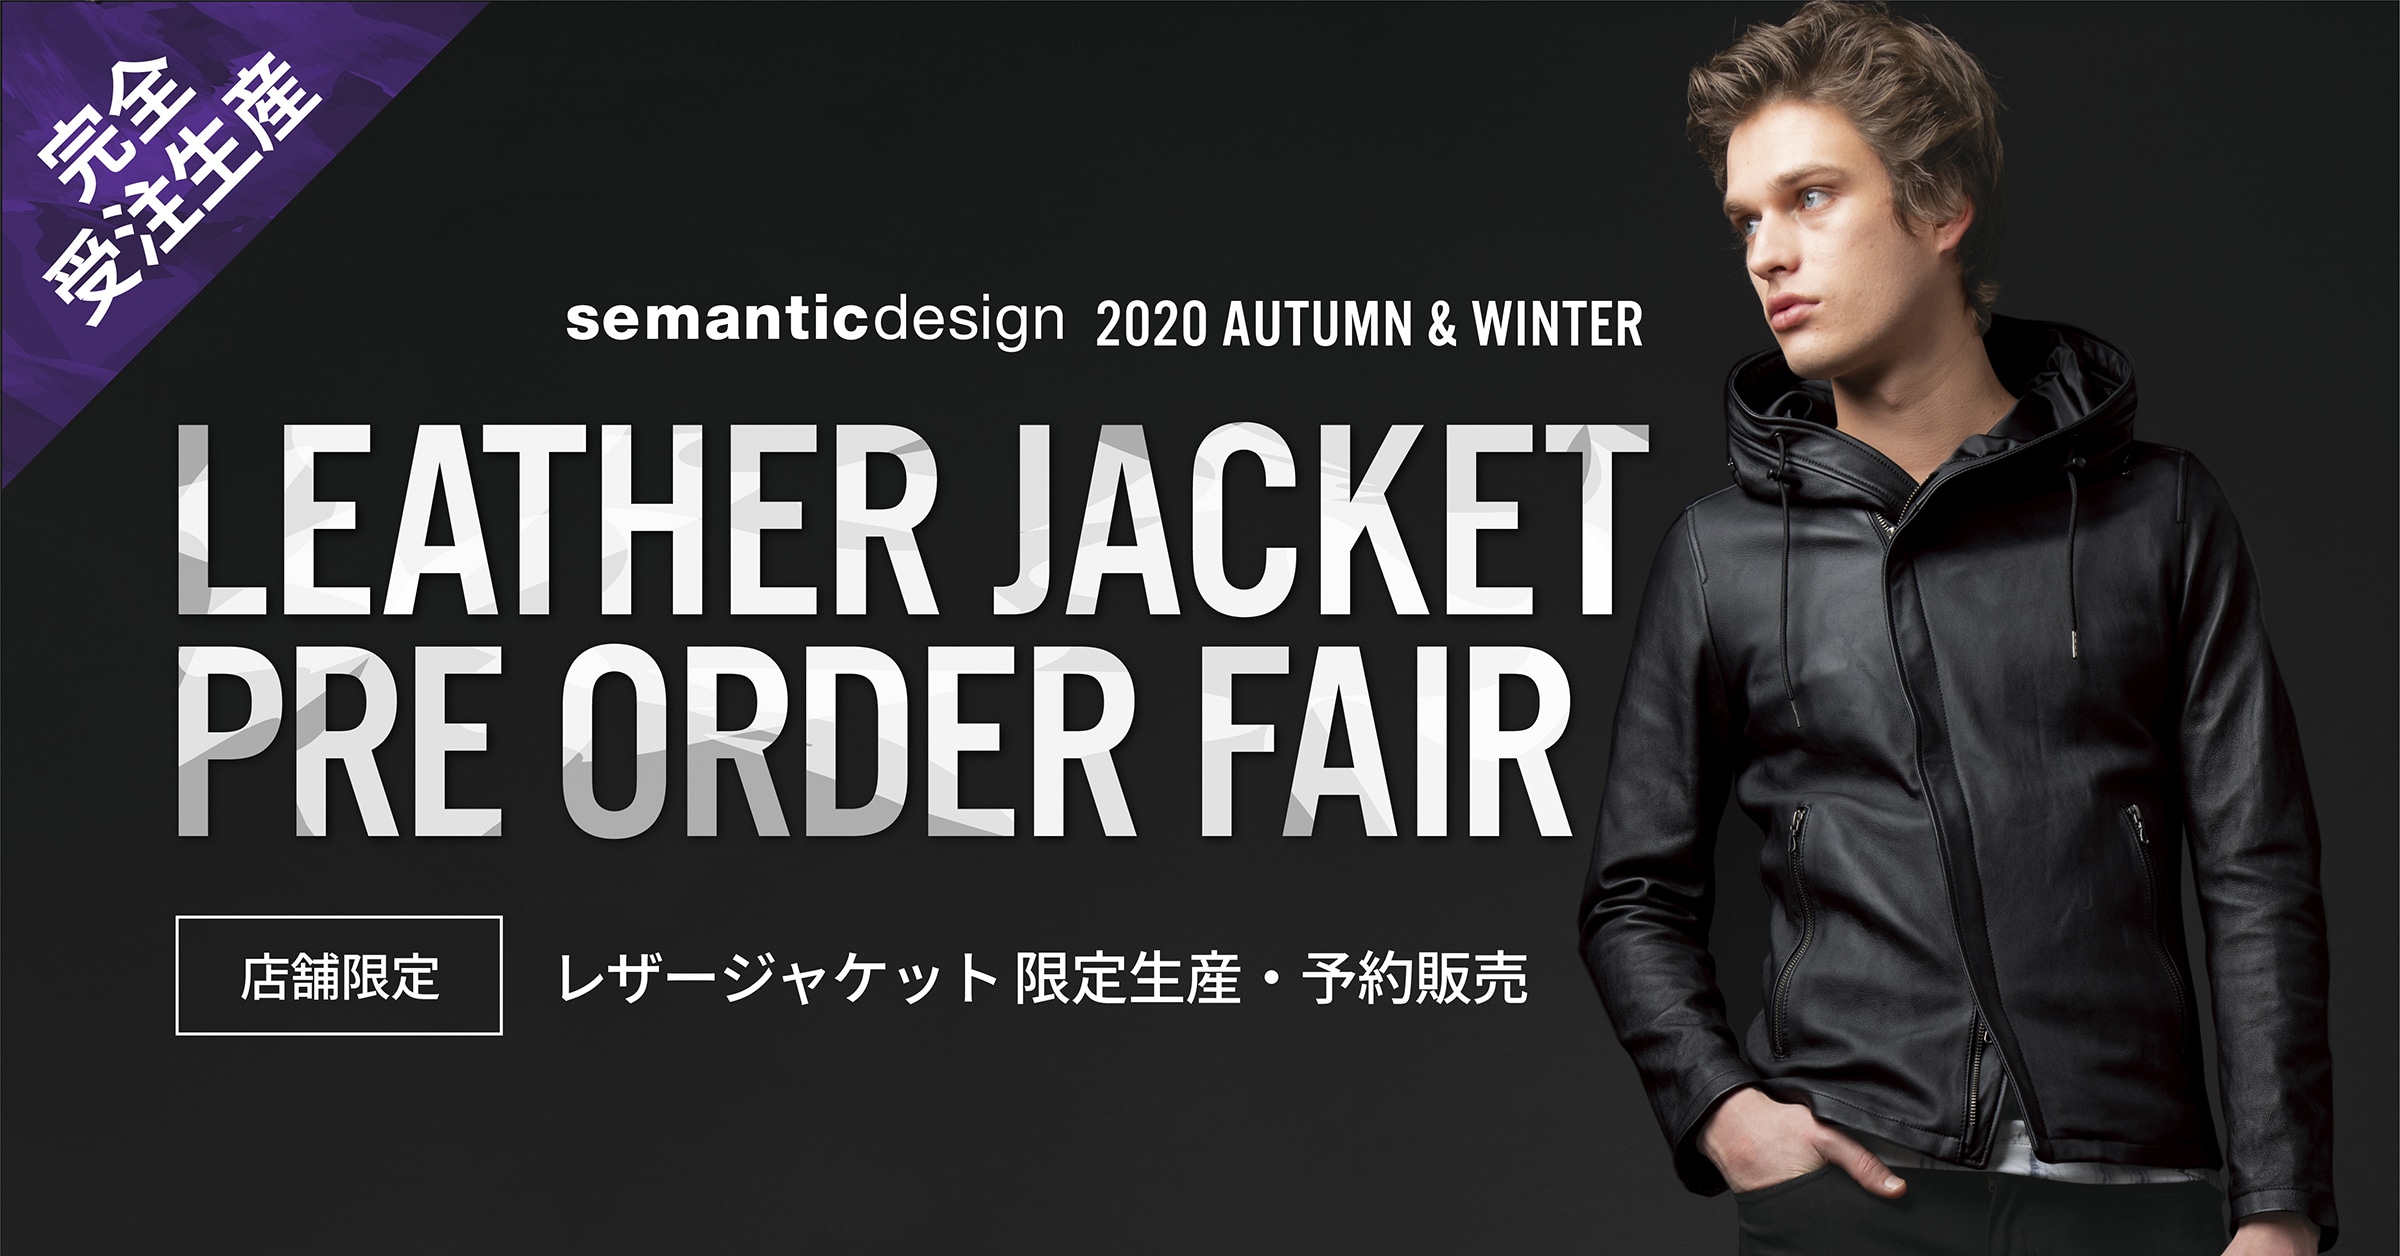 LEATHER JACKET PRE ORDER FAIR - レザージャケット 限定生産・予約販売